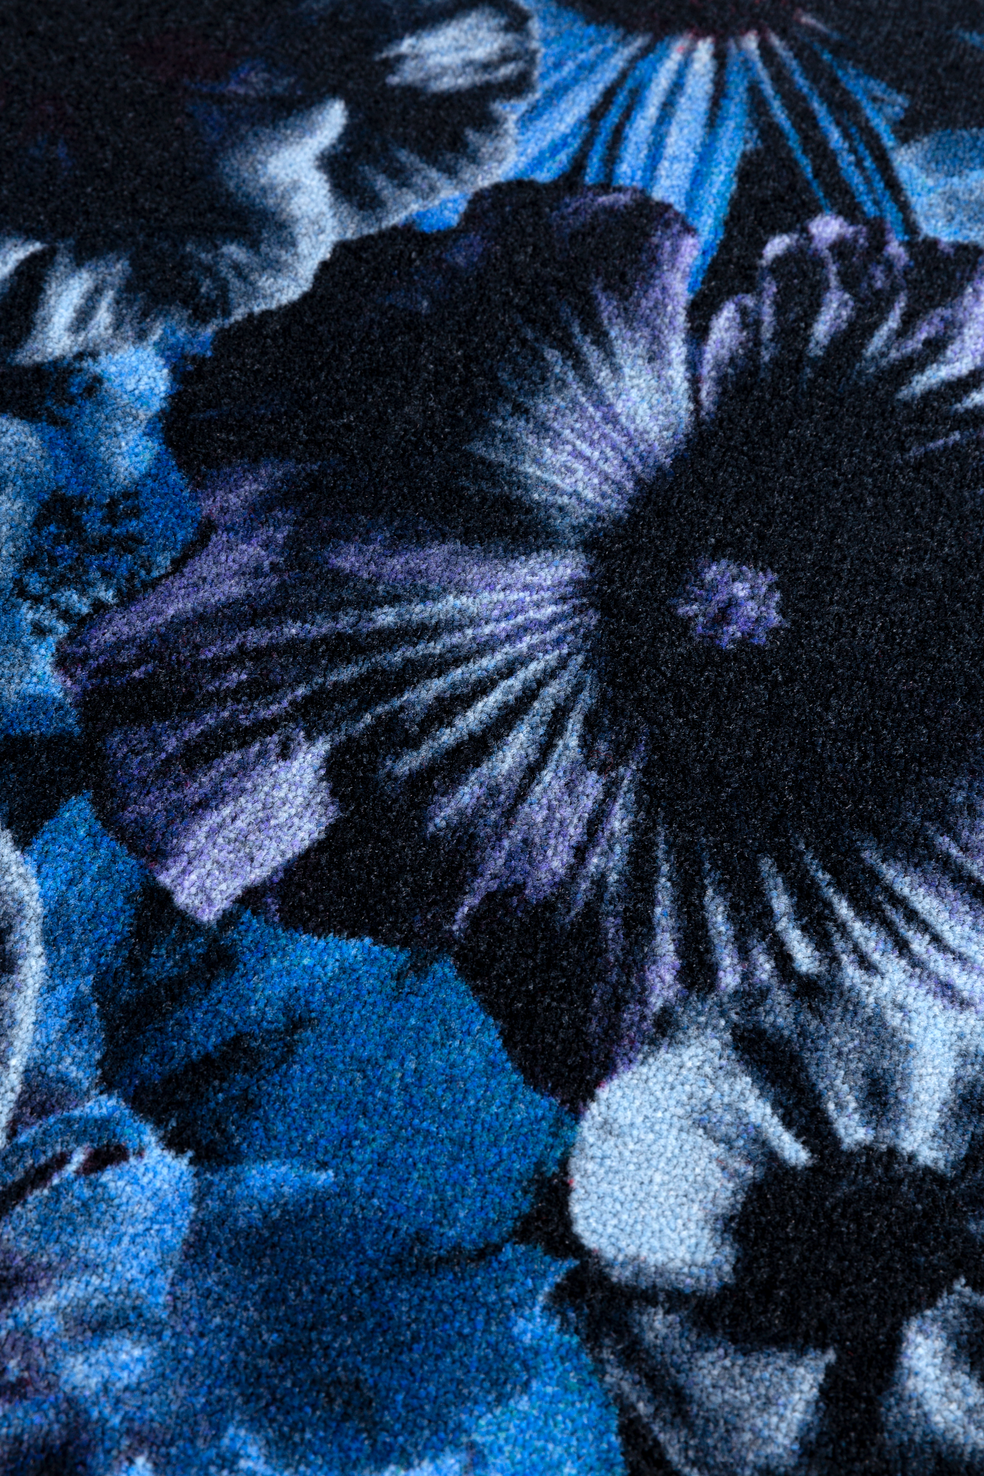 Flowergarden Rectangle - Moooi Carpets